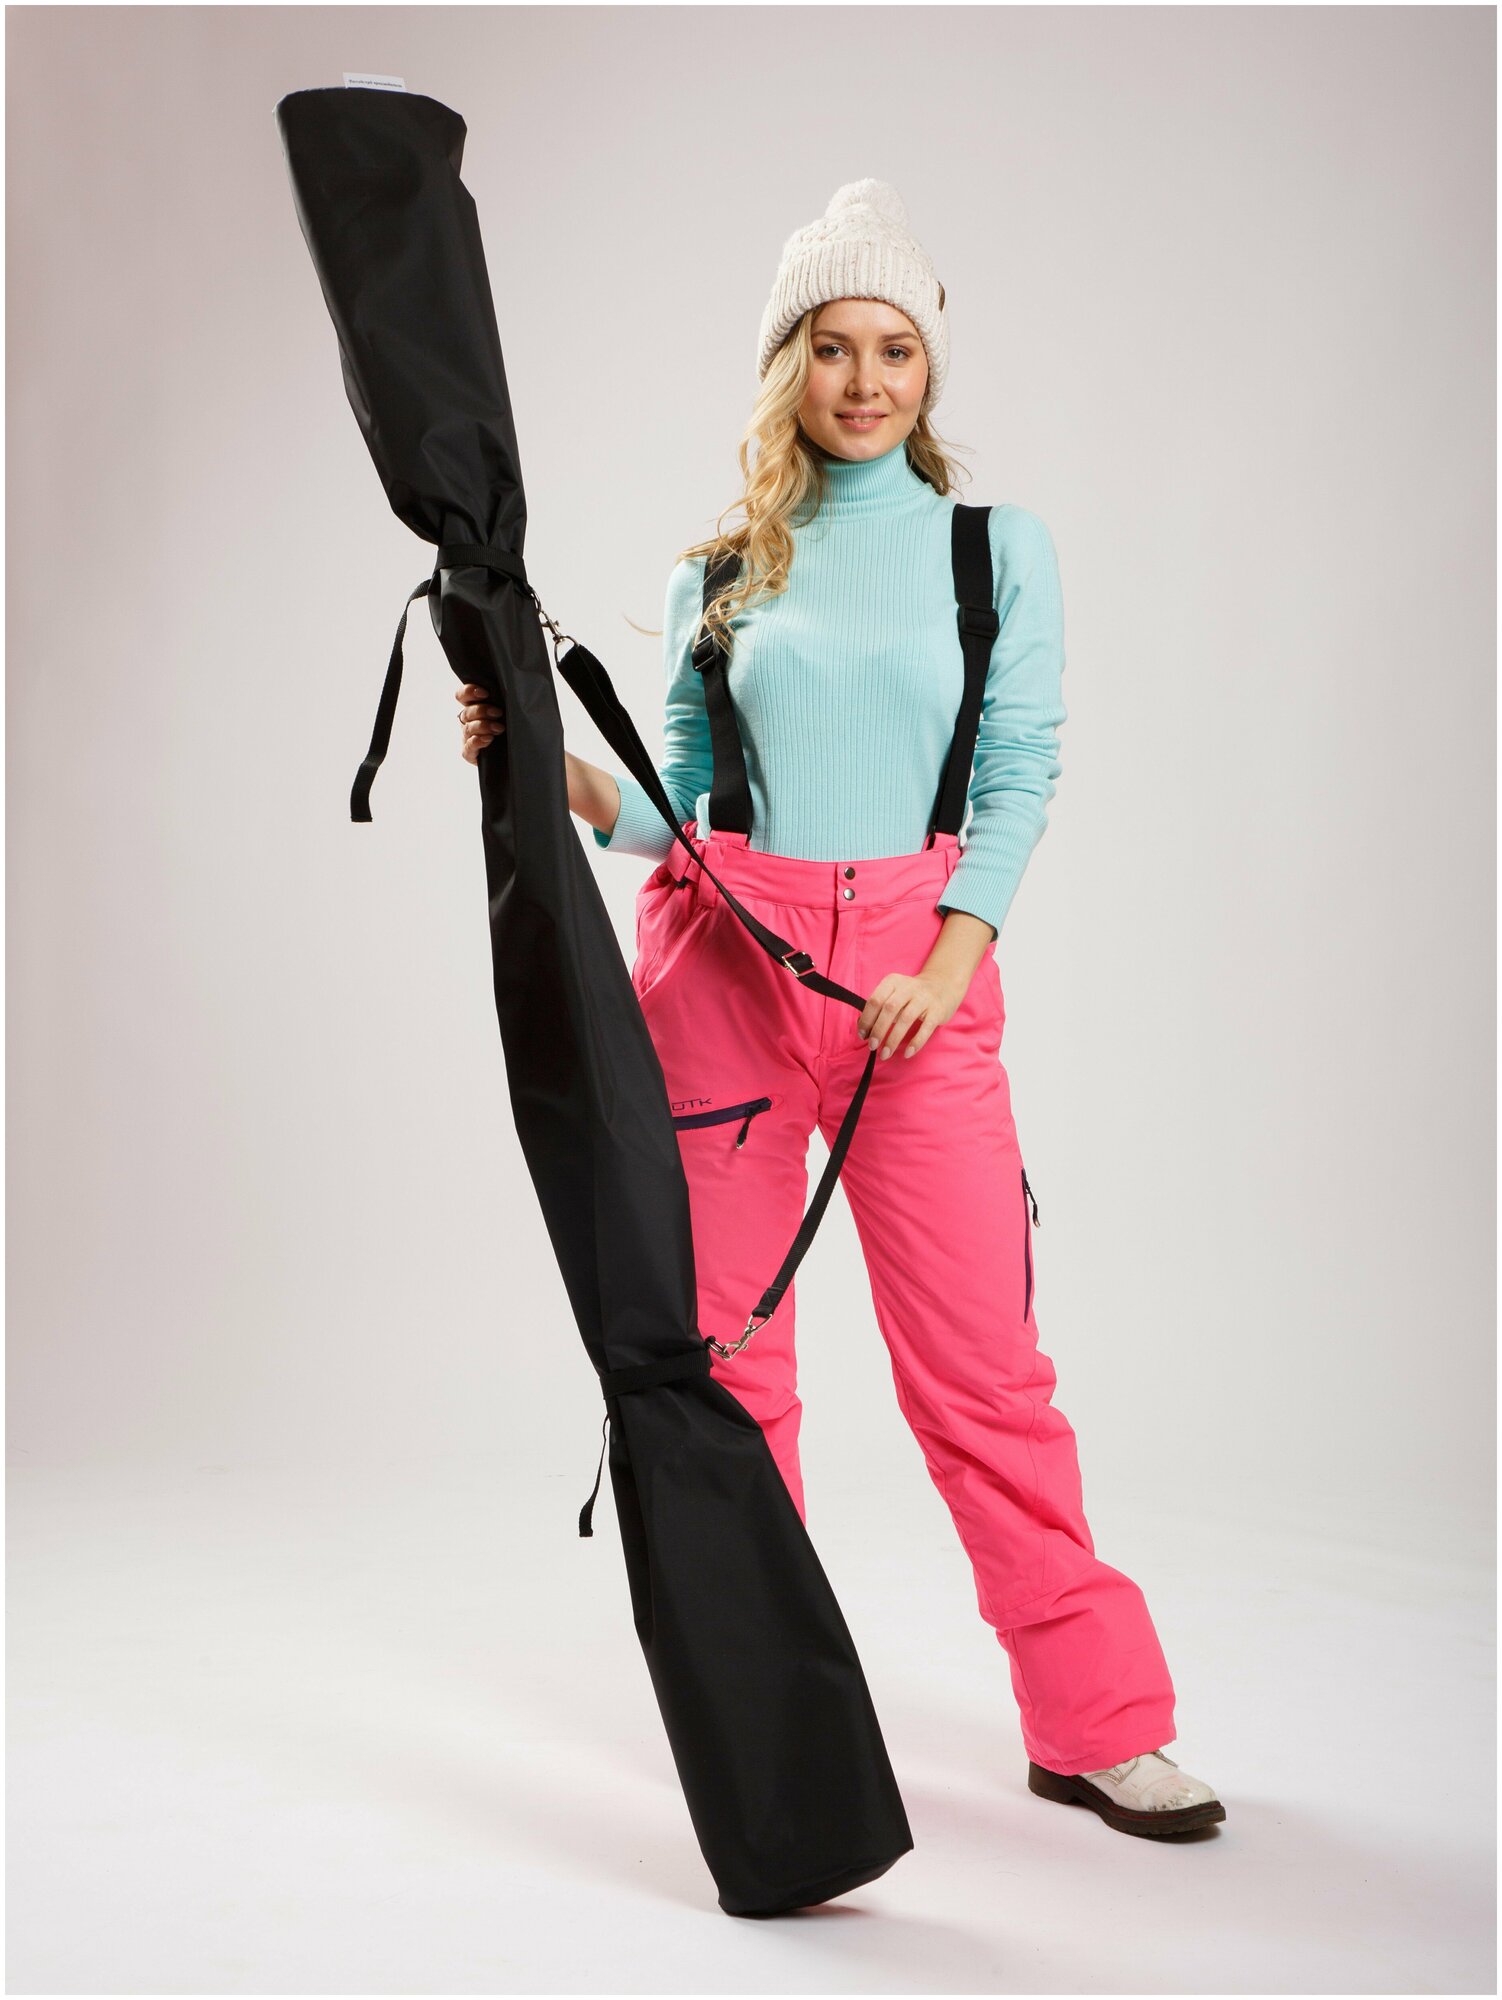 Чехол для беговых лыж Case For Scooter на 1-2 пары, лыжный чехол, лыжная сумка, черный, 175 см